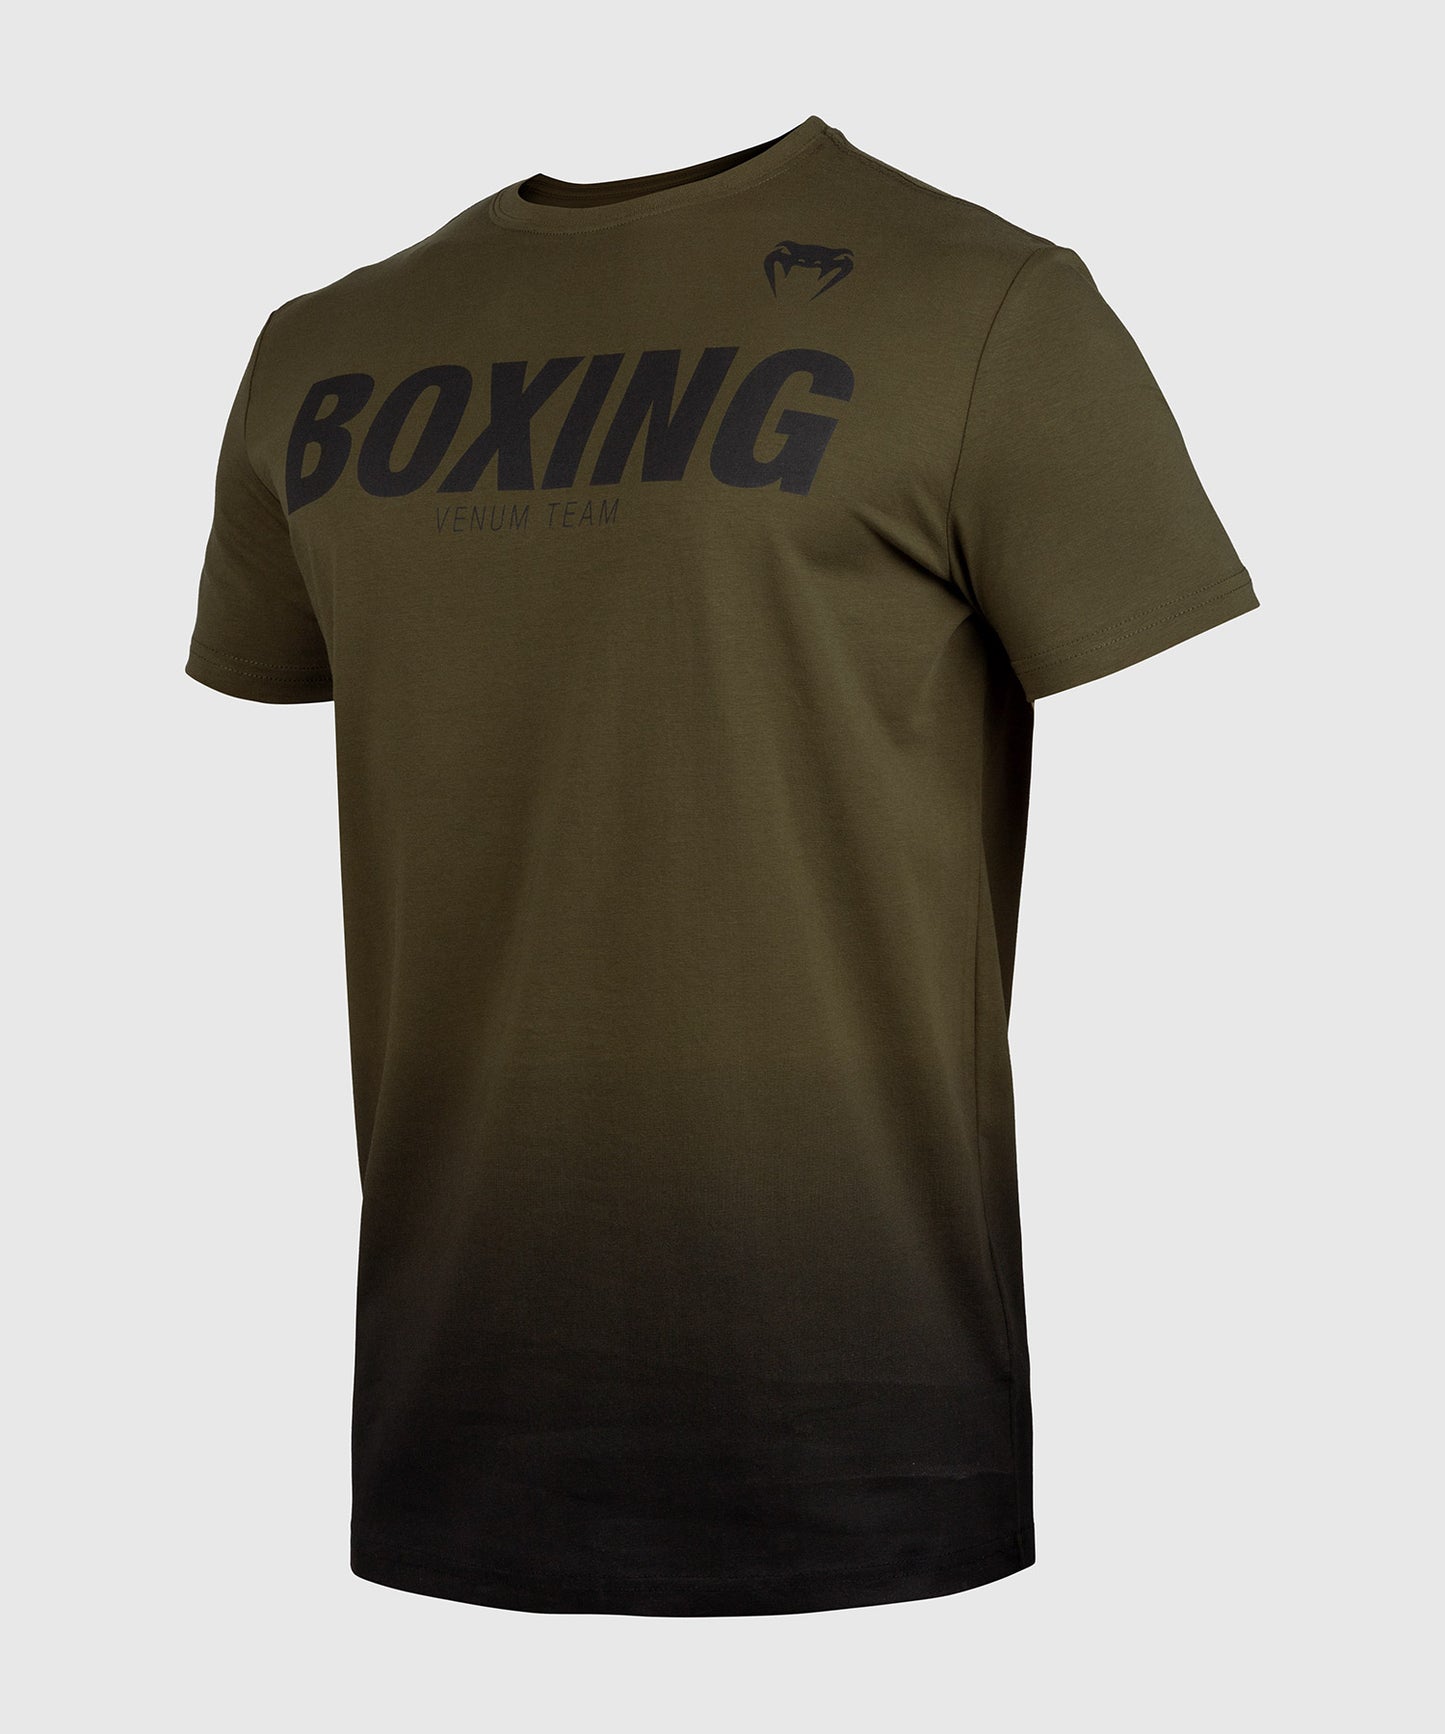 T-shirt  Boxing VT Venum - Cachi/Nero